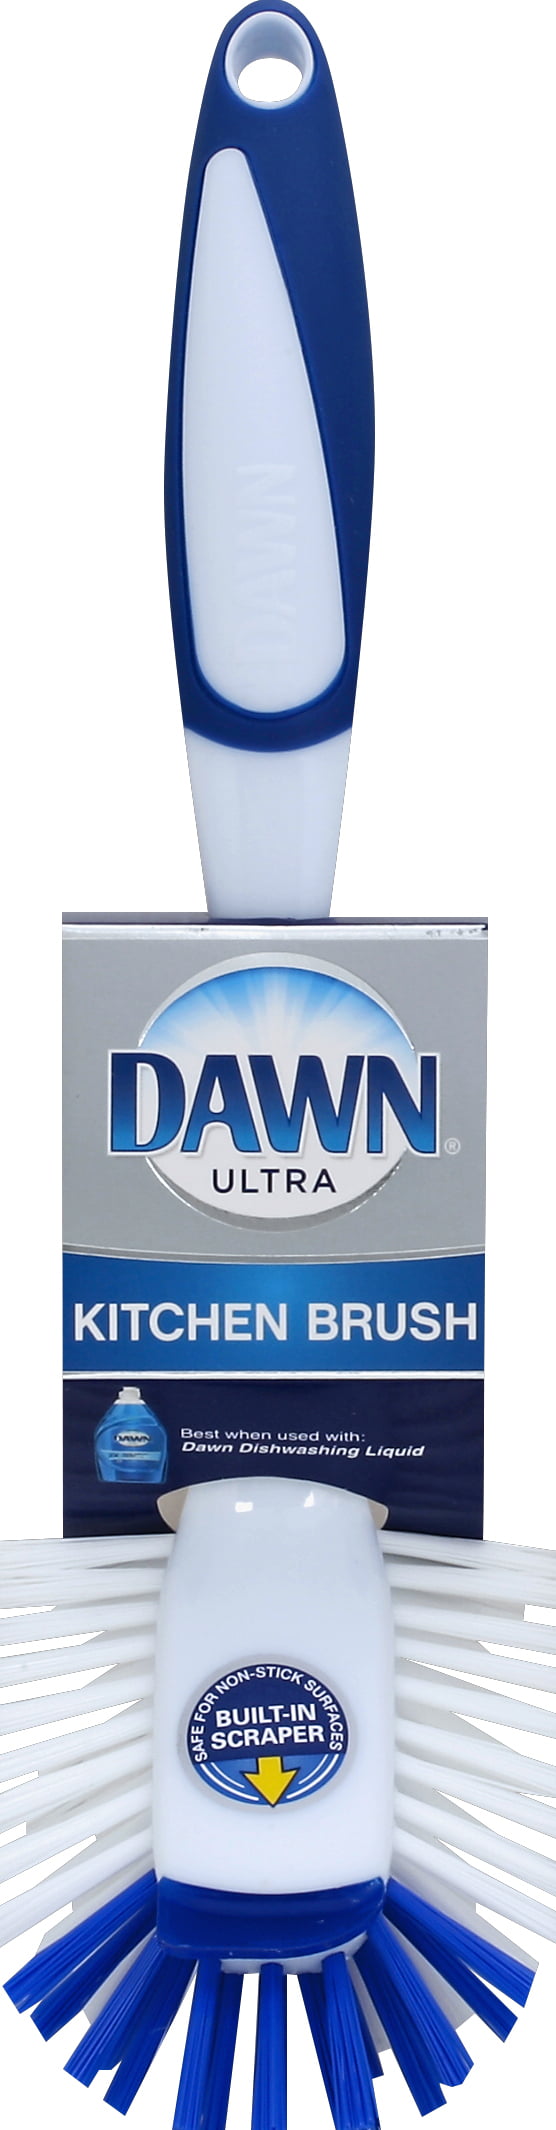 Dawn Ultra Radial Kitchen Brush